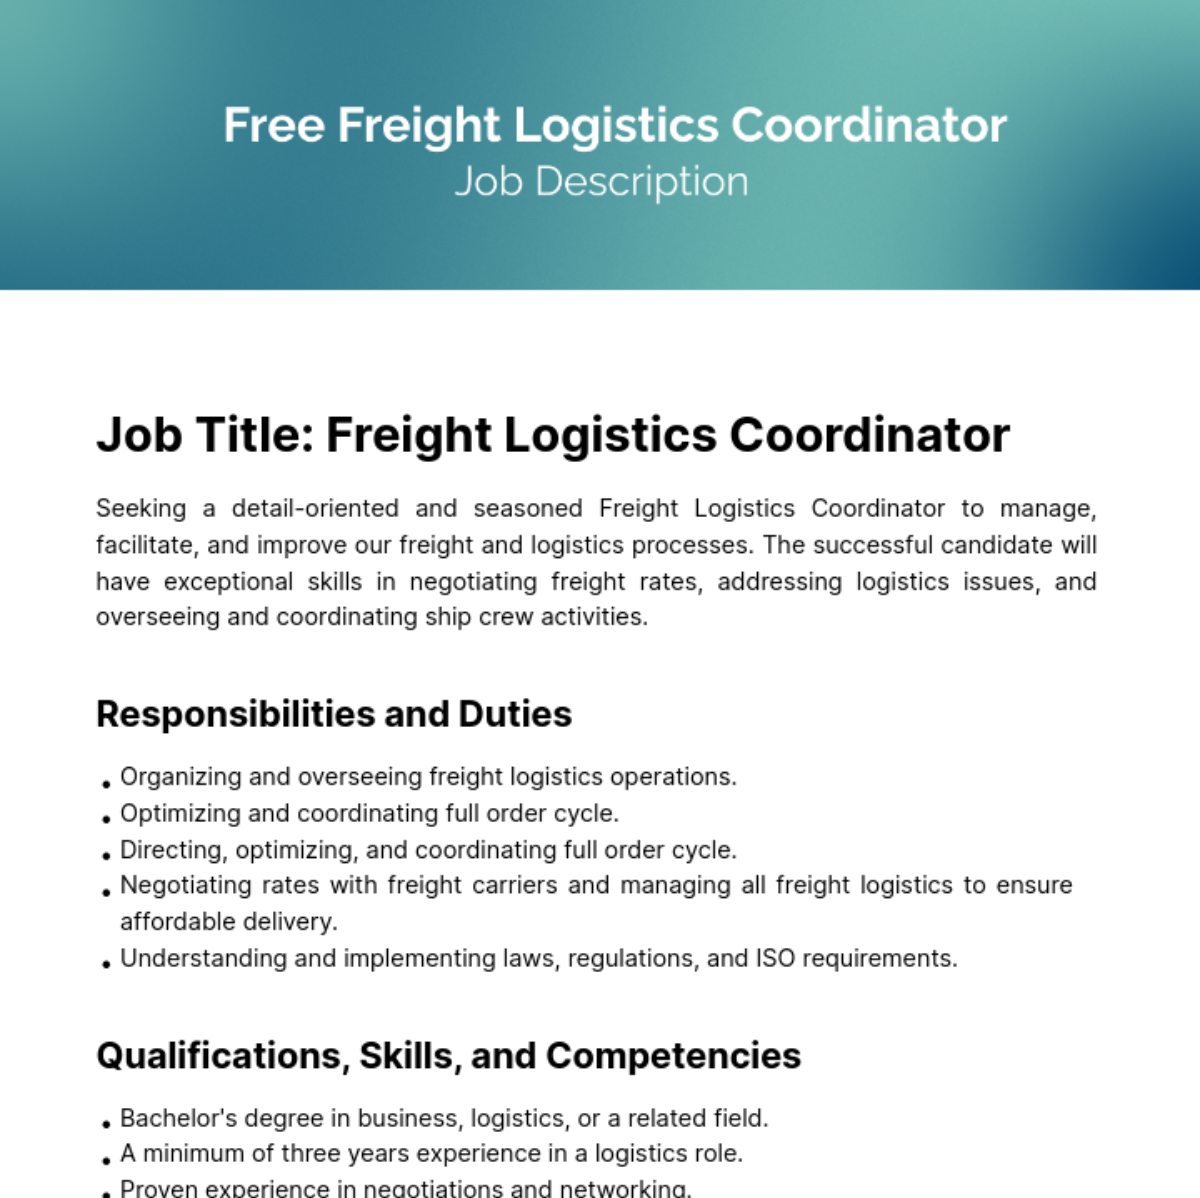 Free Freight Logistics Coordinator Job Description Template